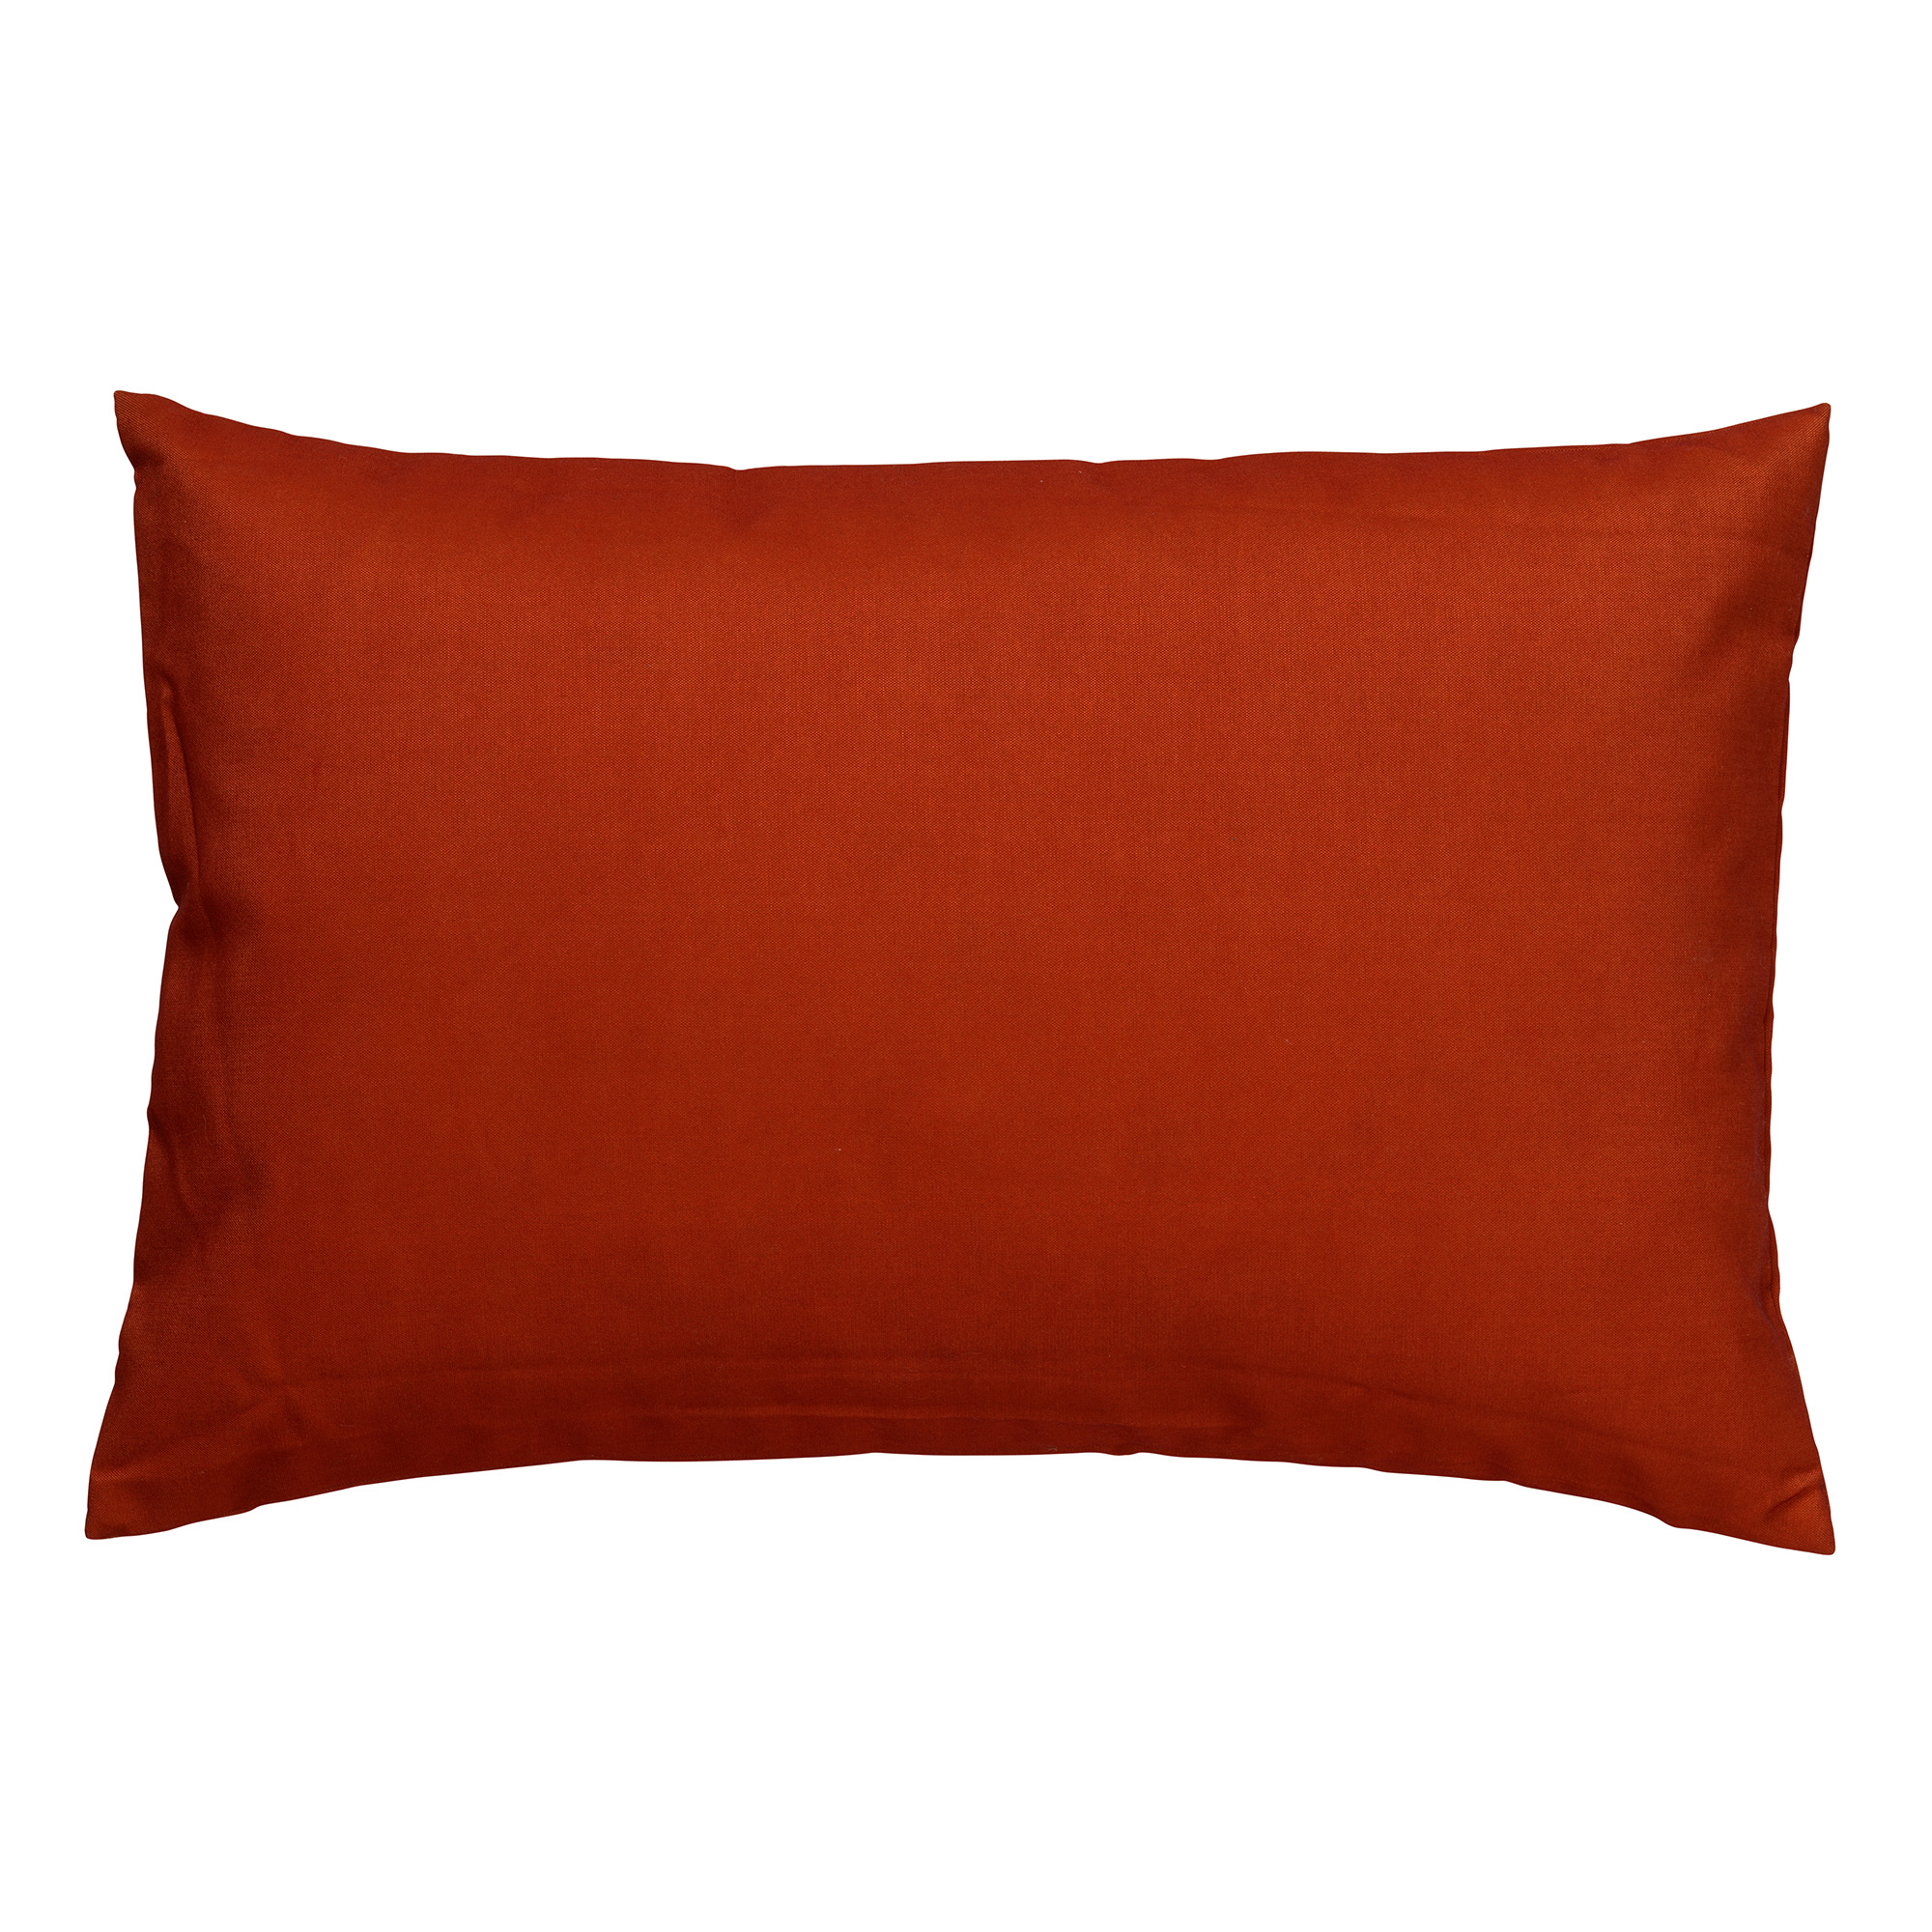 SANTORINI - Cushion 40x60 cm Potters Clay - orange-terracotta